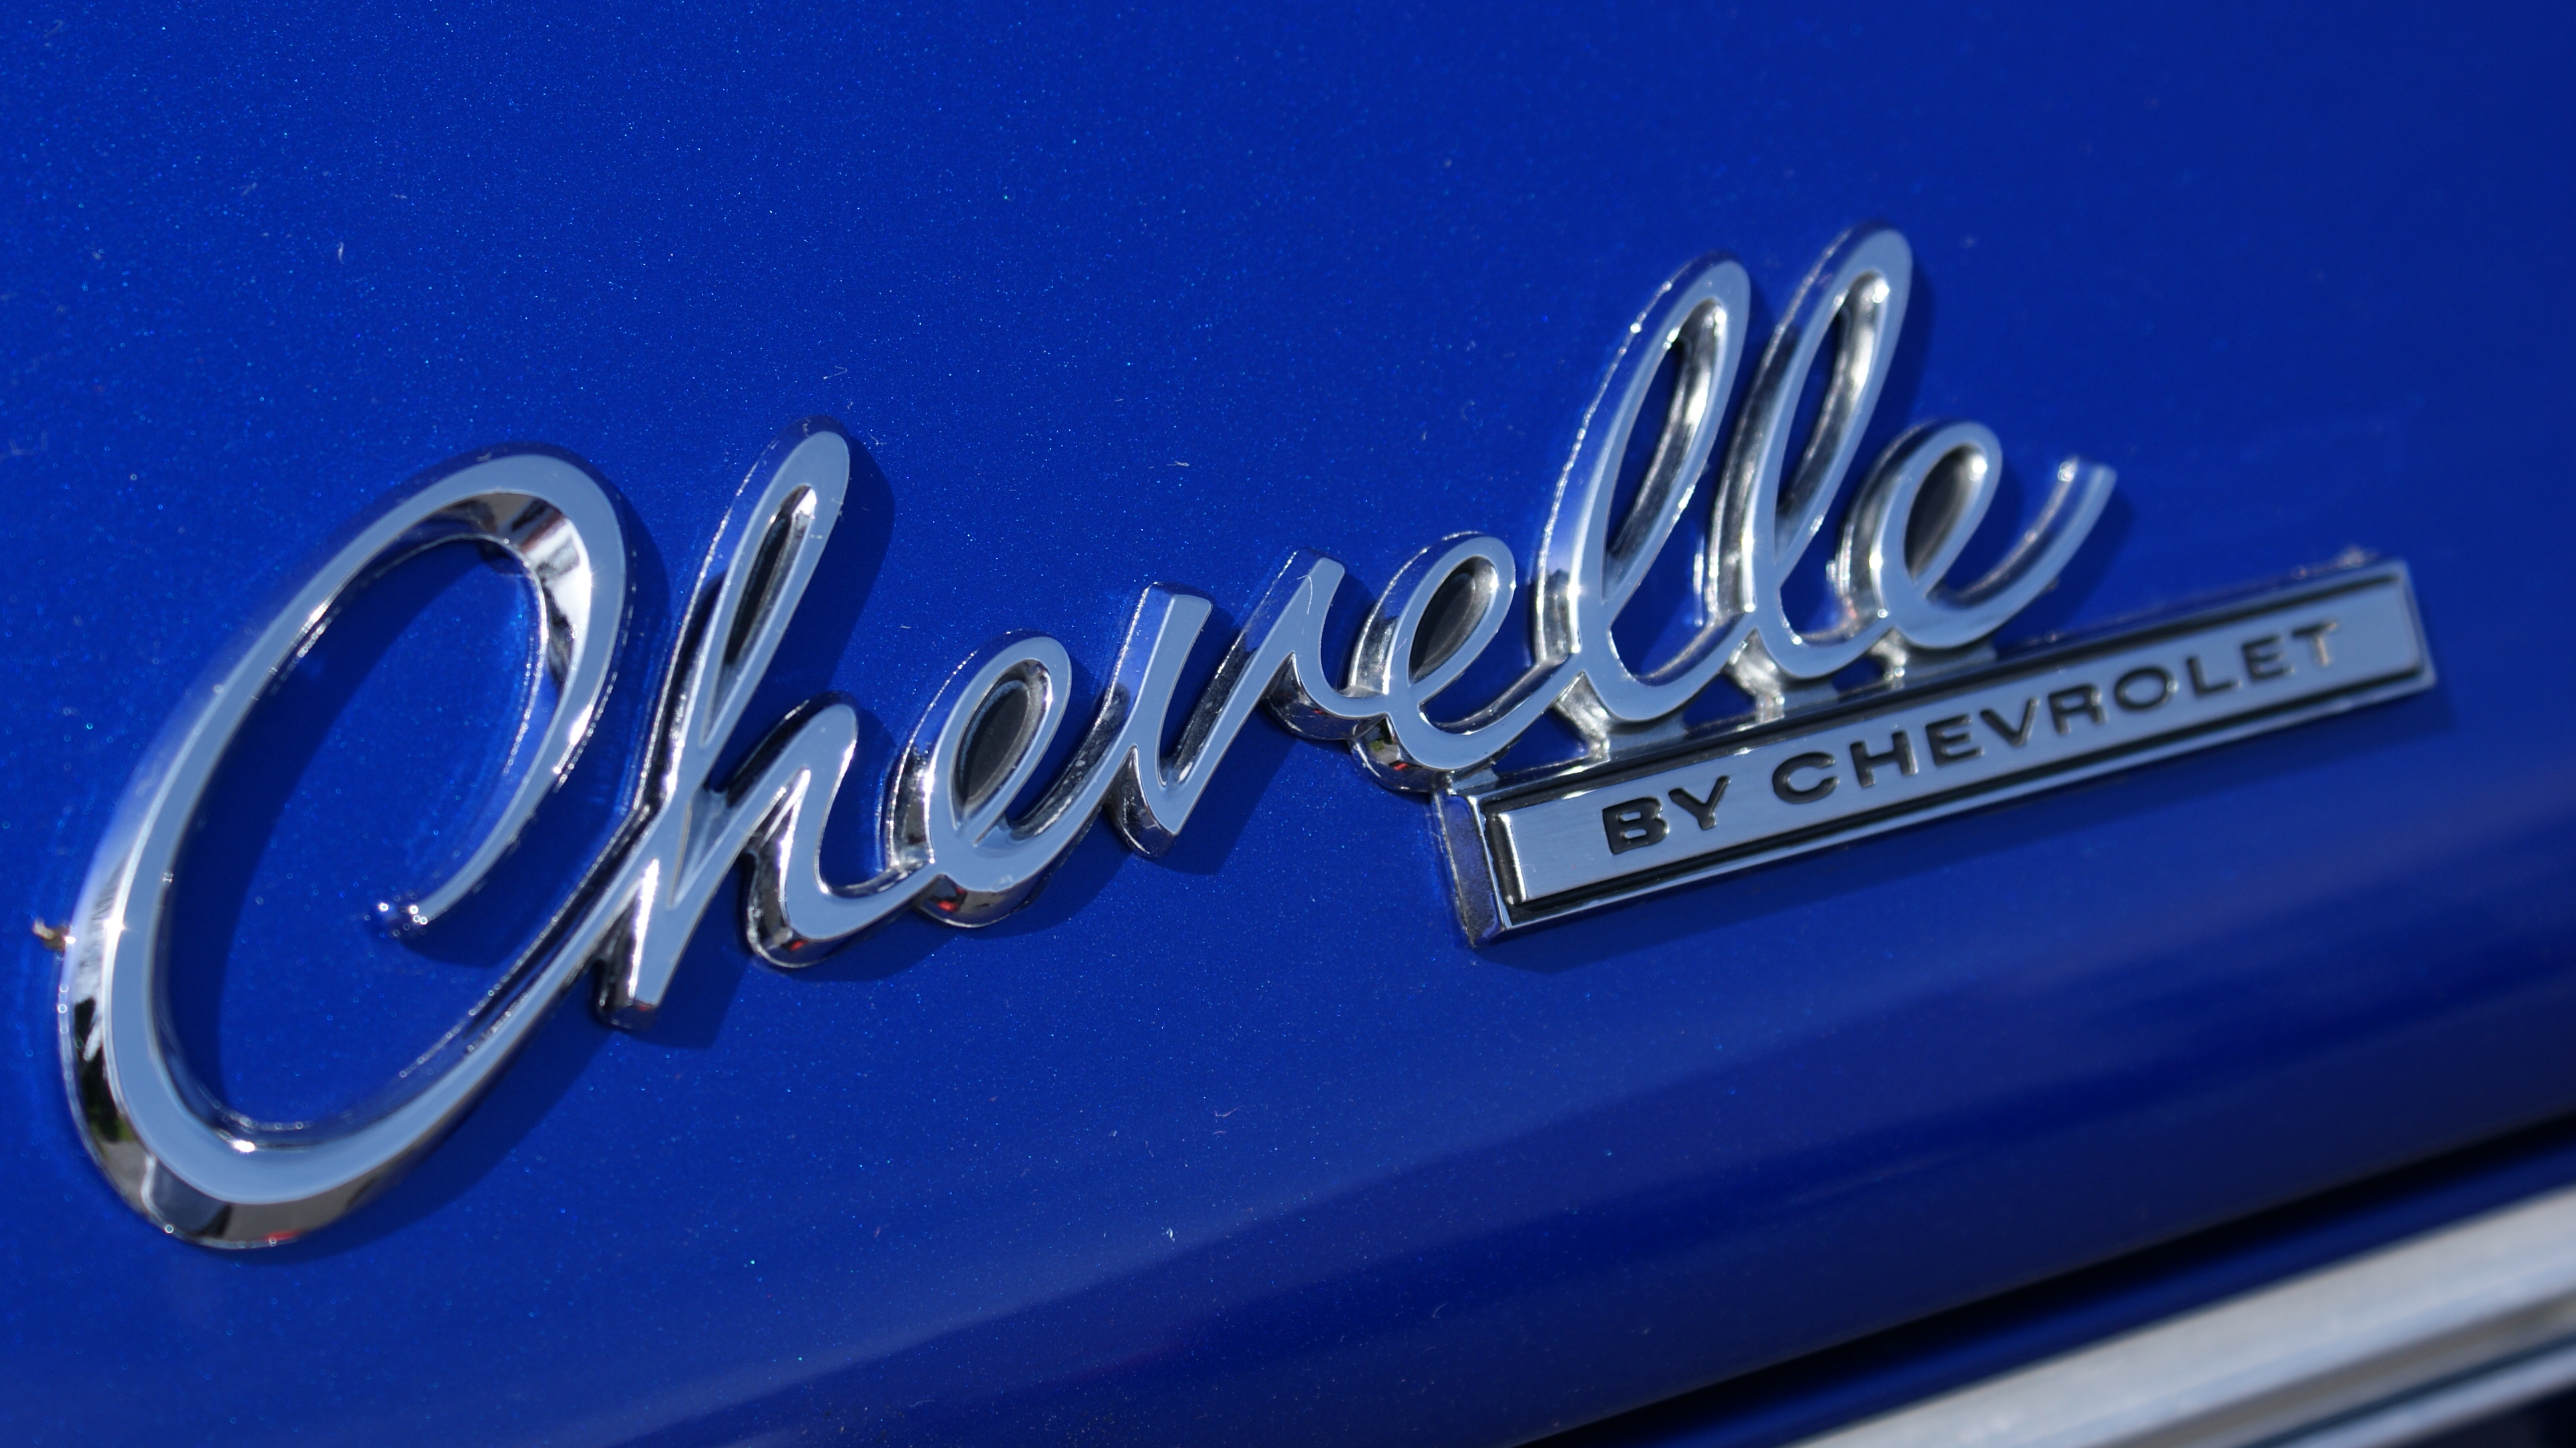 Vehicles Chevrolet Chevelle 3872x2176